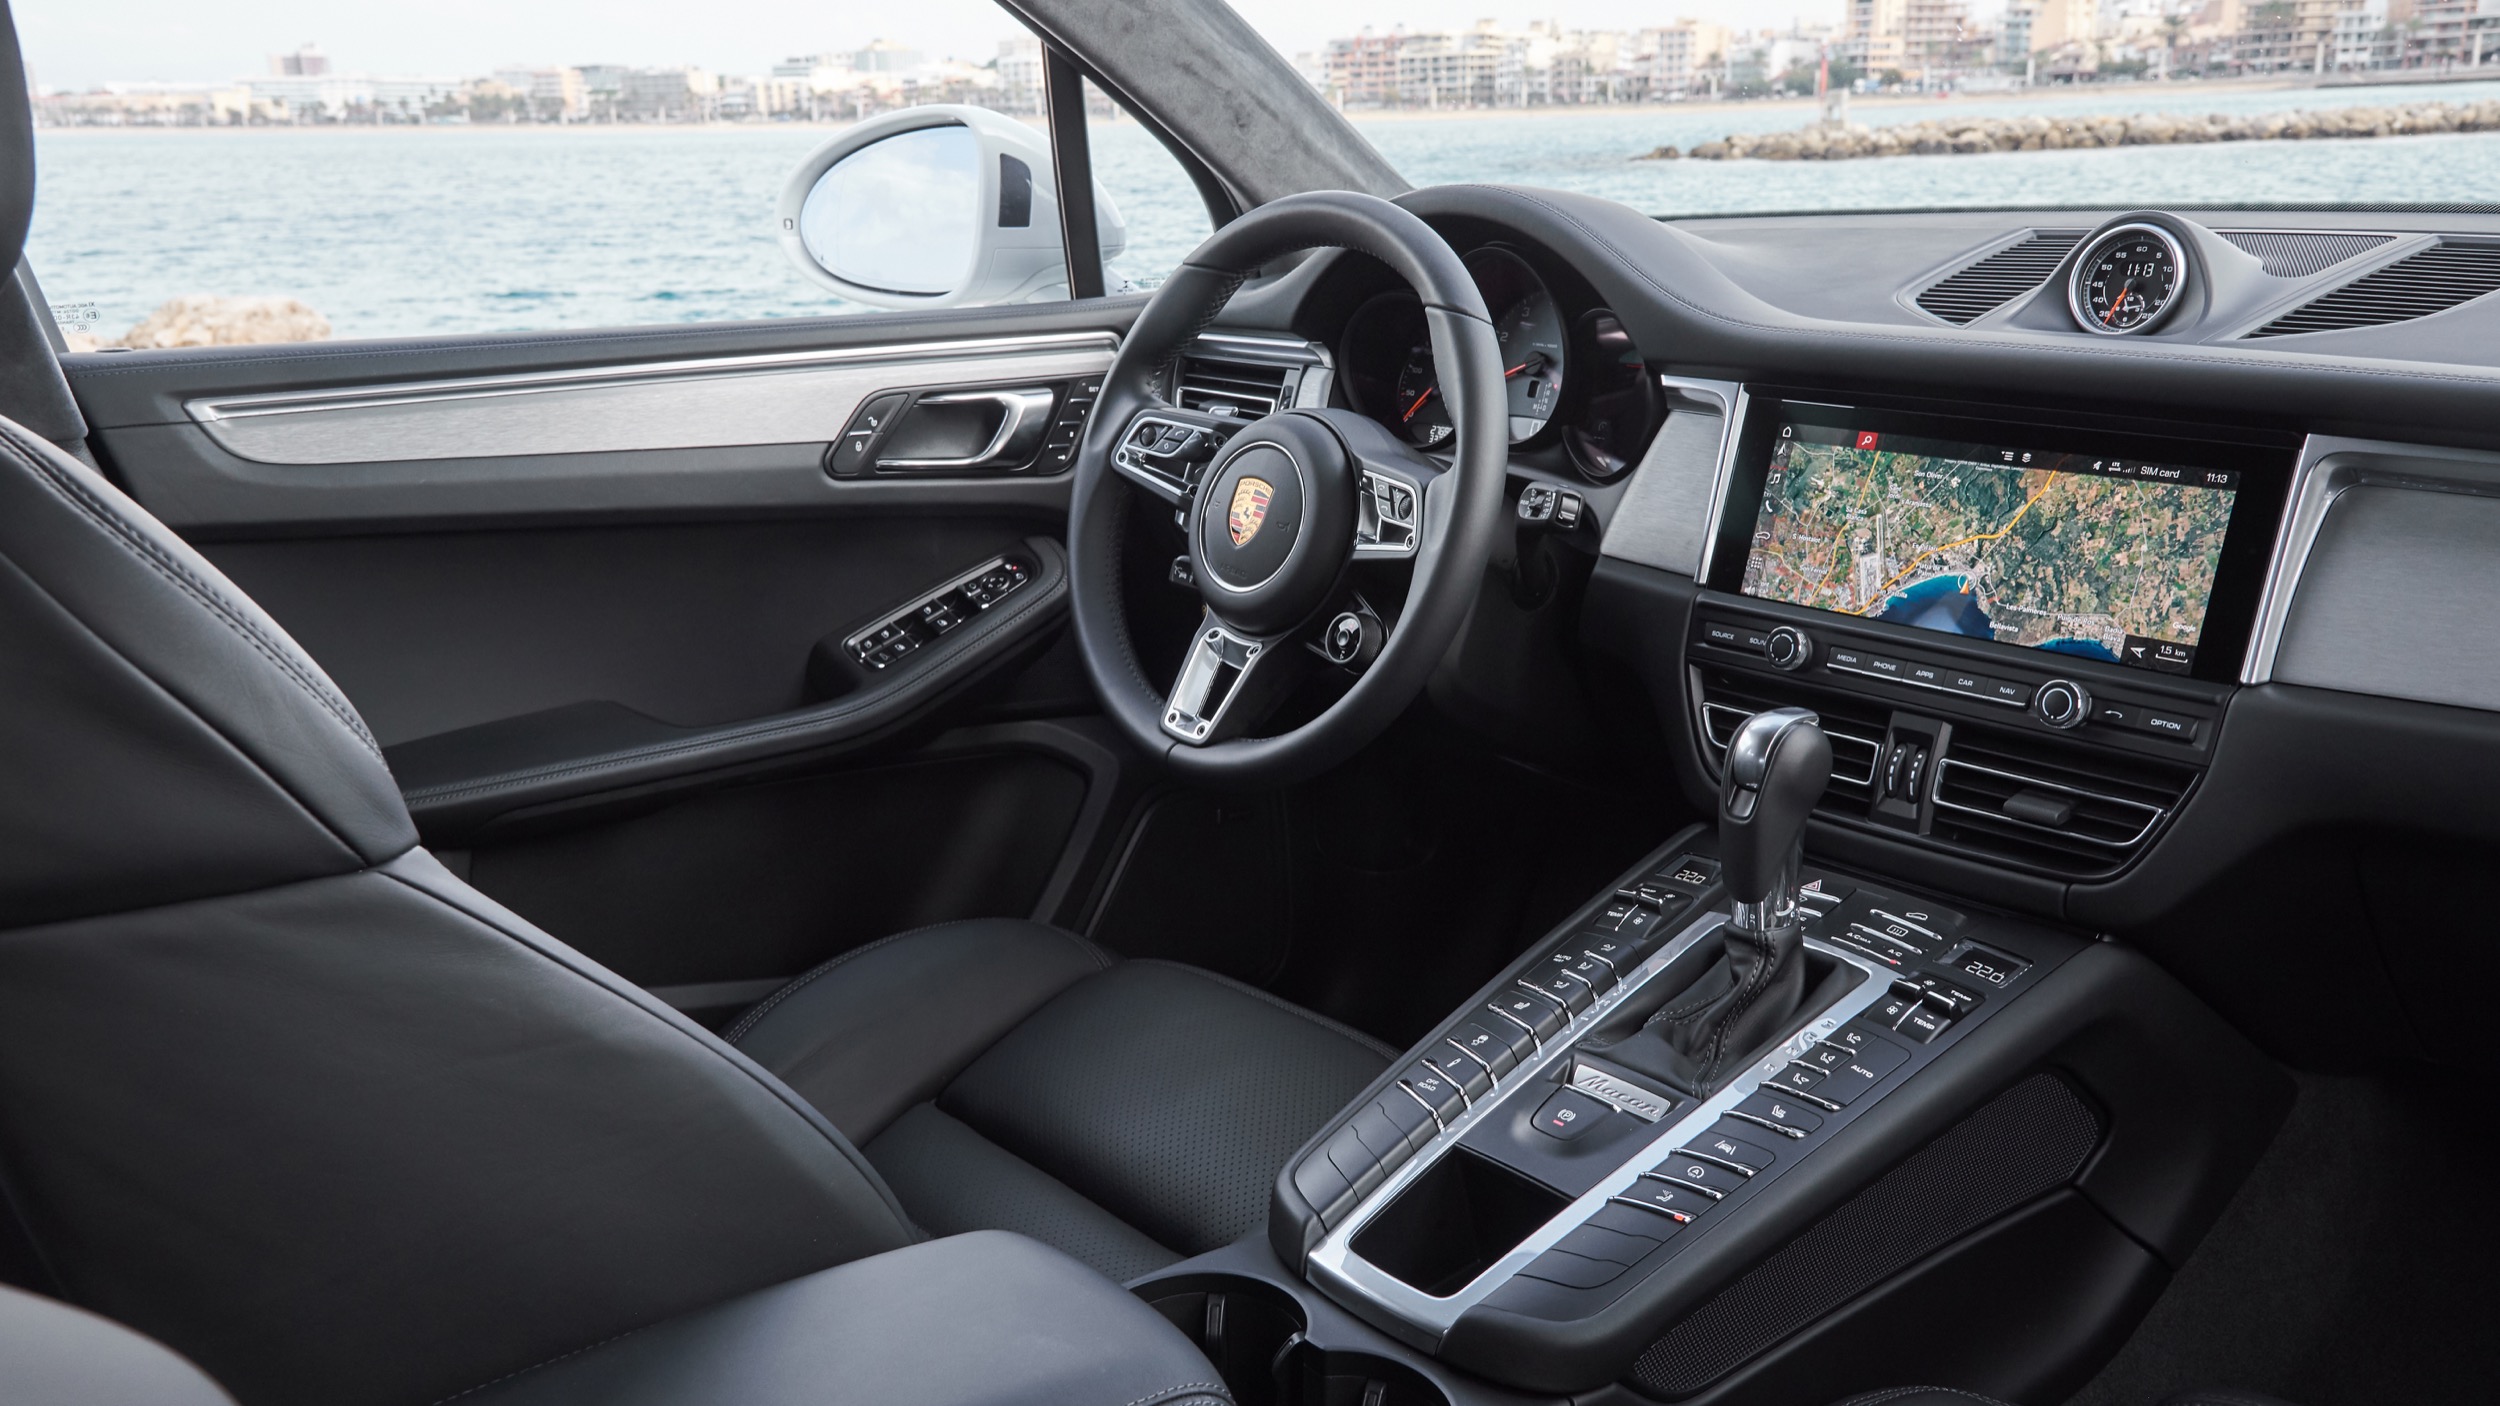 2019 Porsche Macan S driving impressions | Autoblog